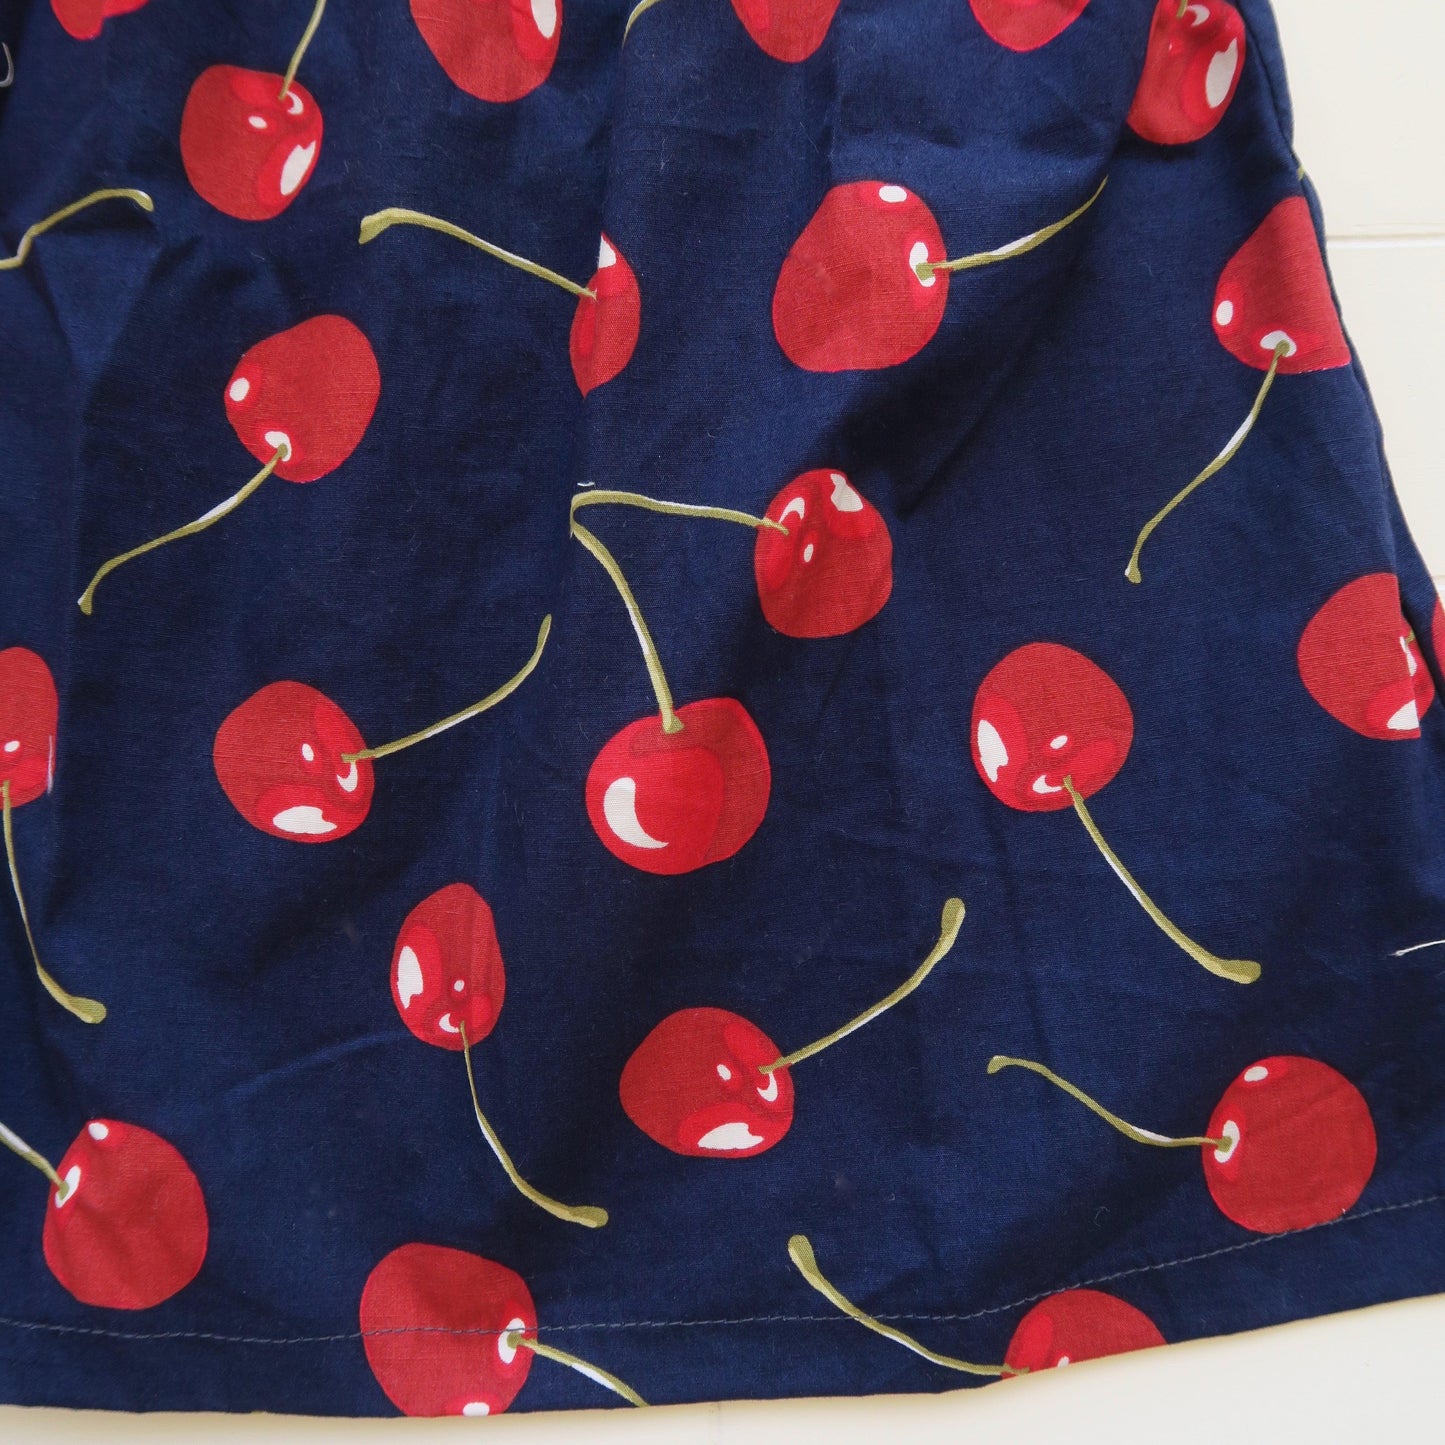 Tea Rose Dress in Navy Cherries Print - Lil' Tati